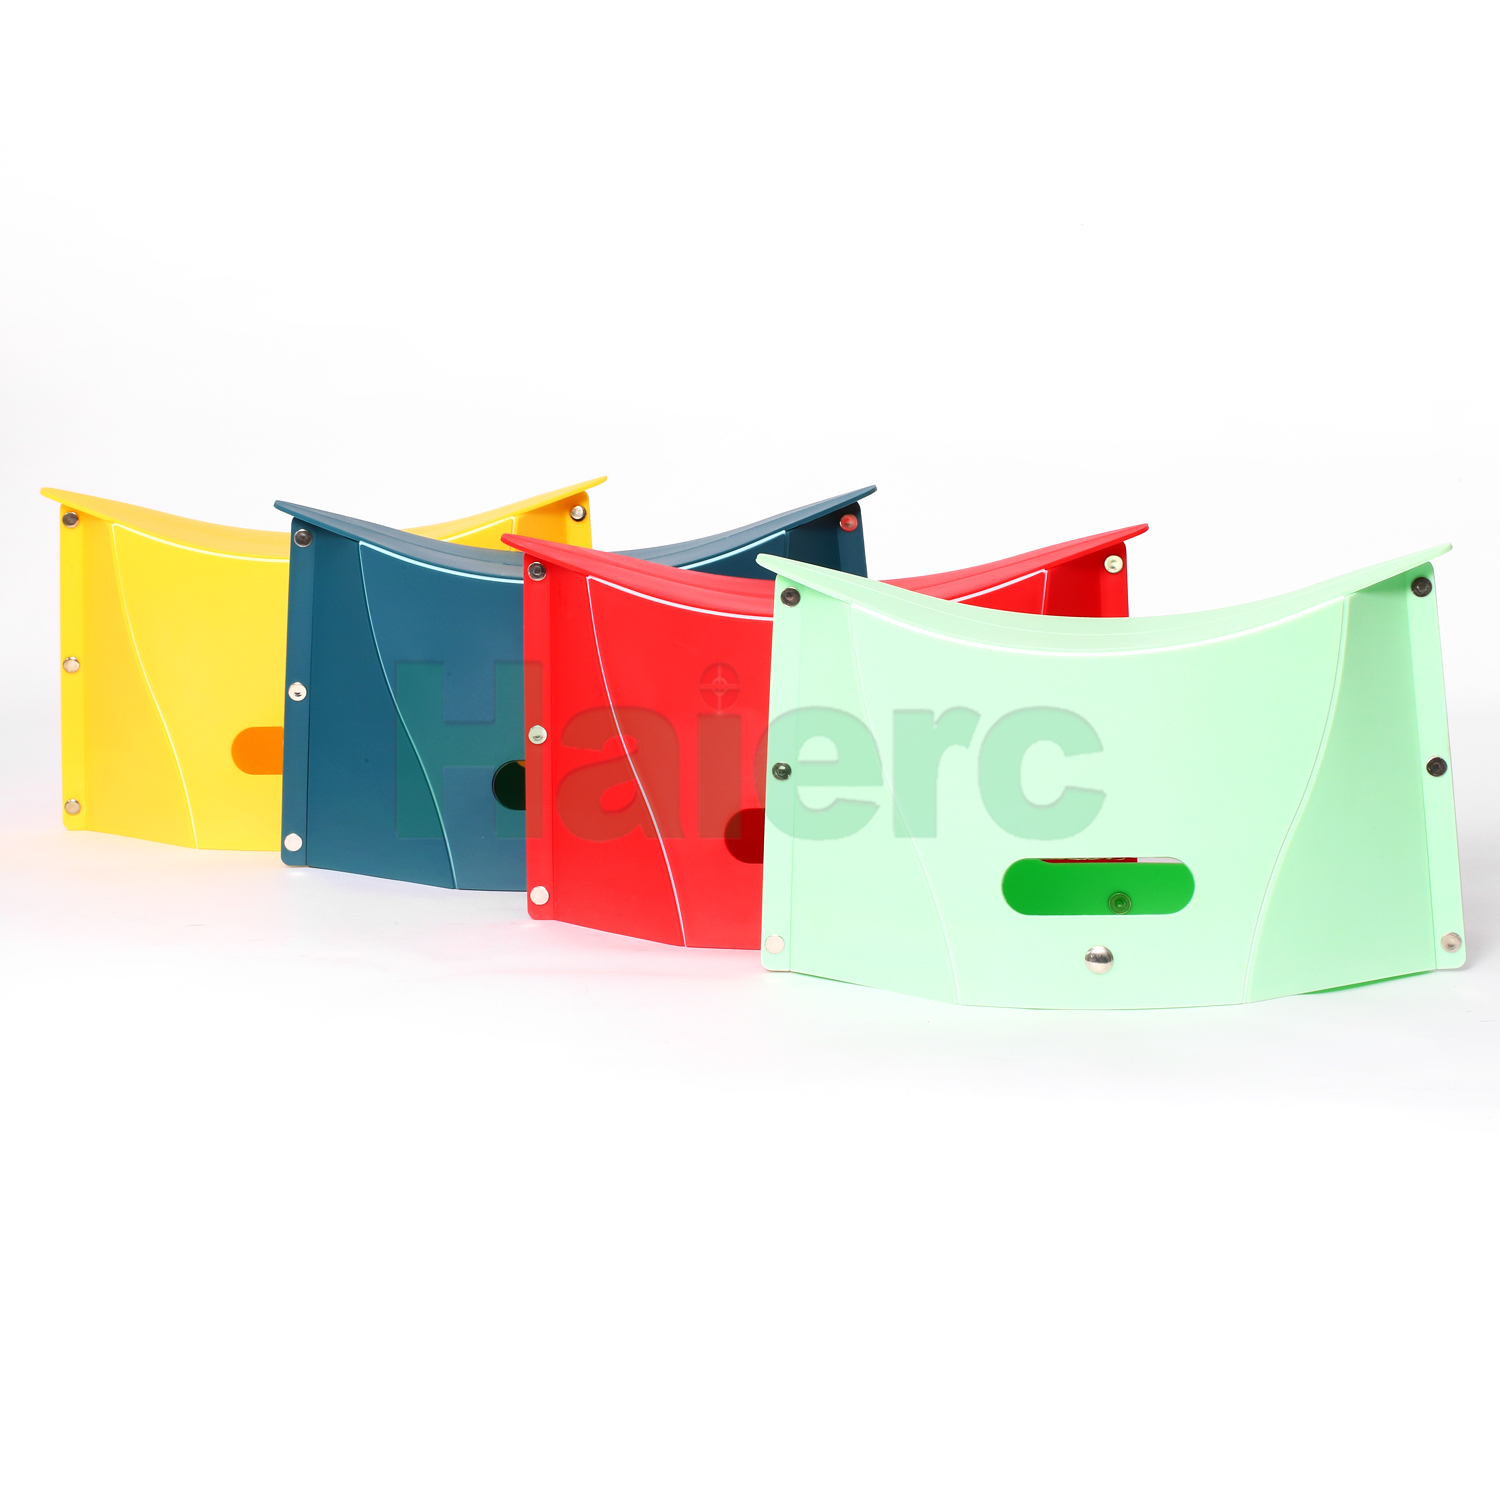 >Haierc Hot Sell Plastic Foldable Stool Kids Folding Retractable Stool